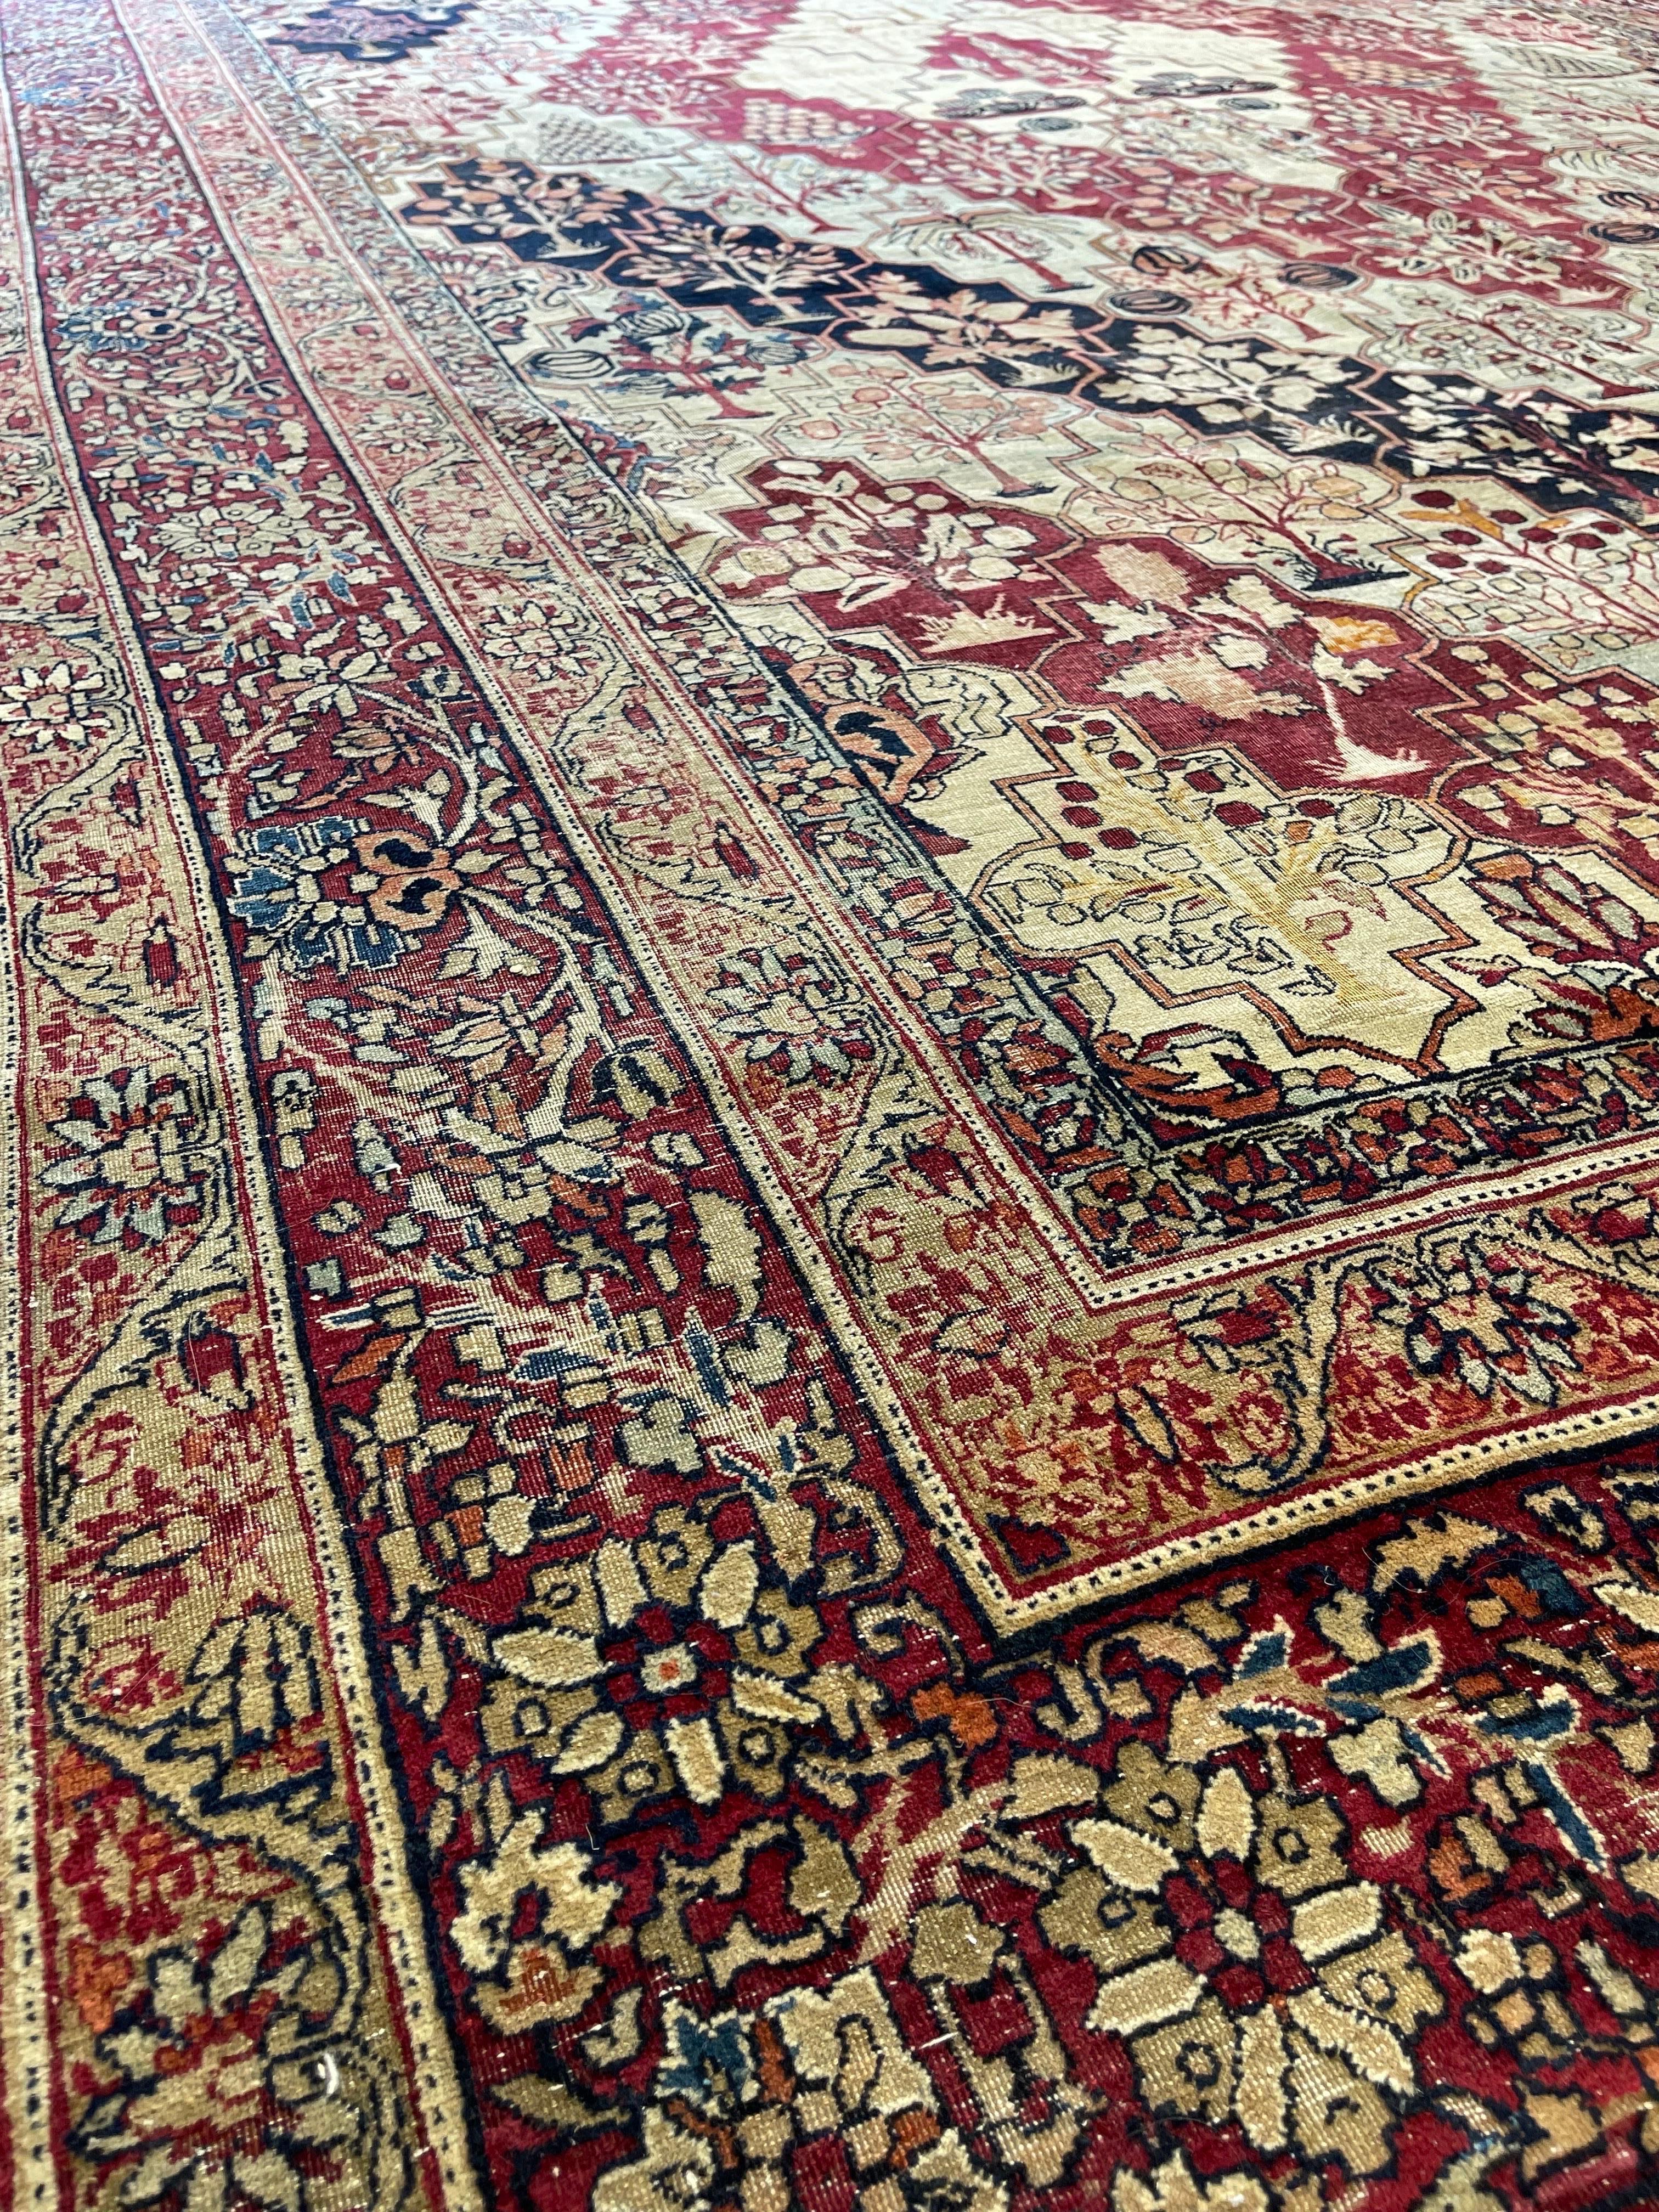 Early 20th Century Antique Persian Lavar Kerman Wedding Carpet circa 1900 For Sale